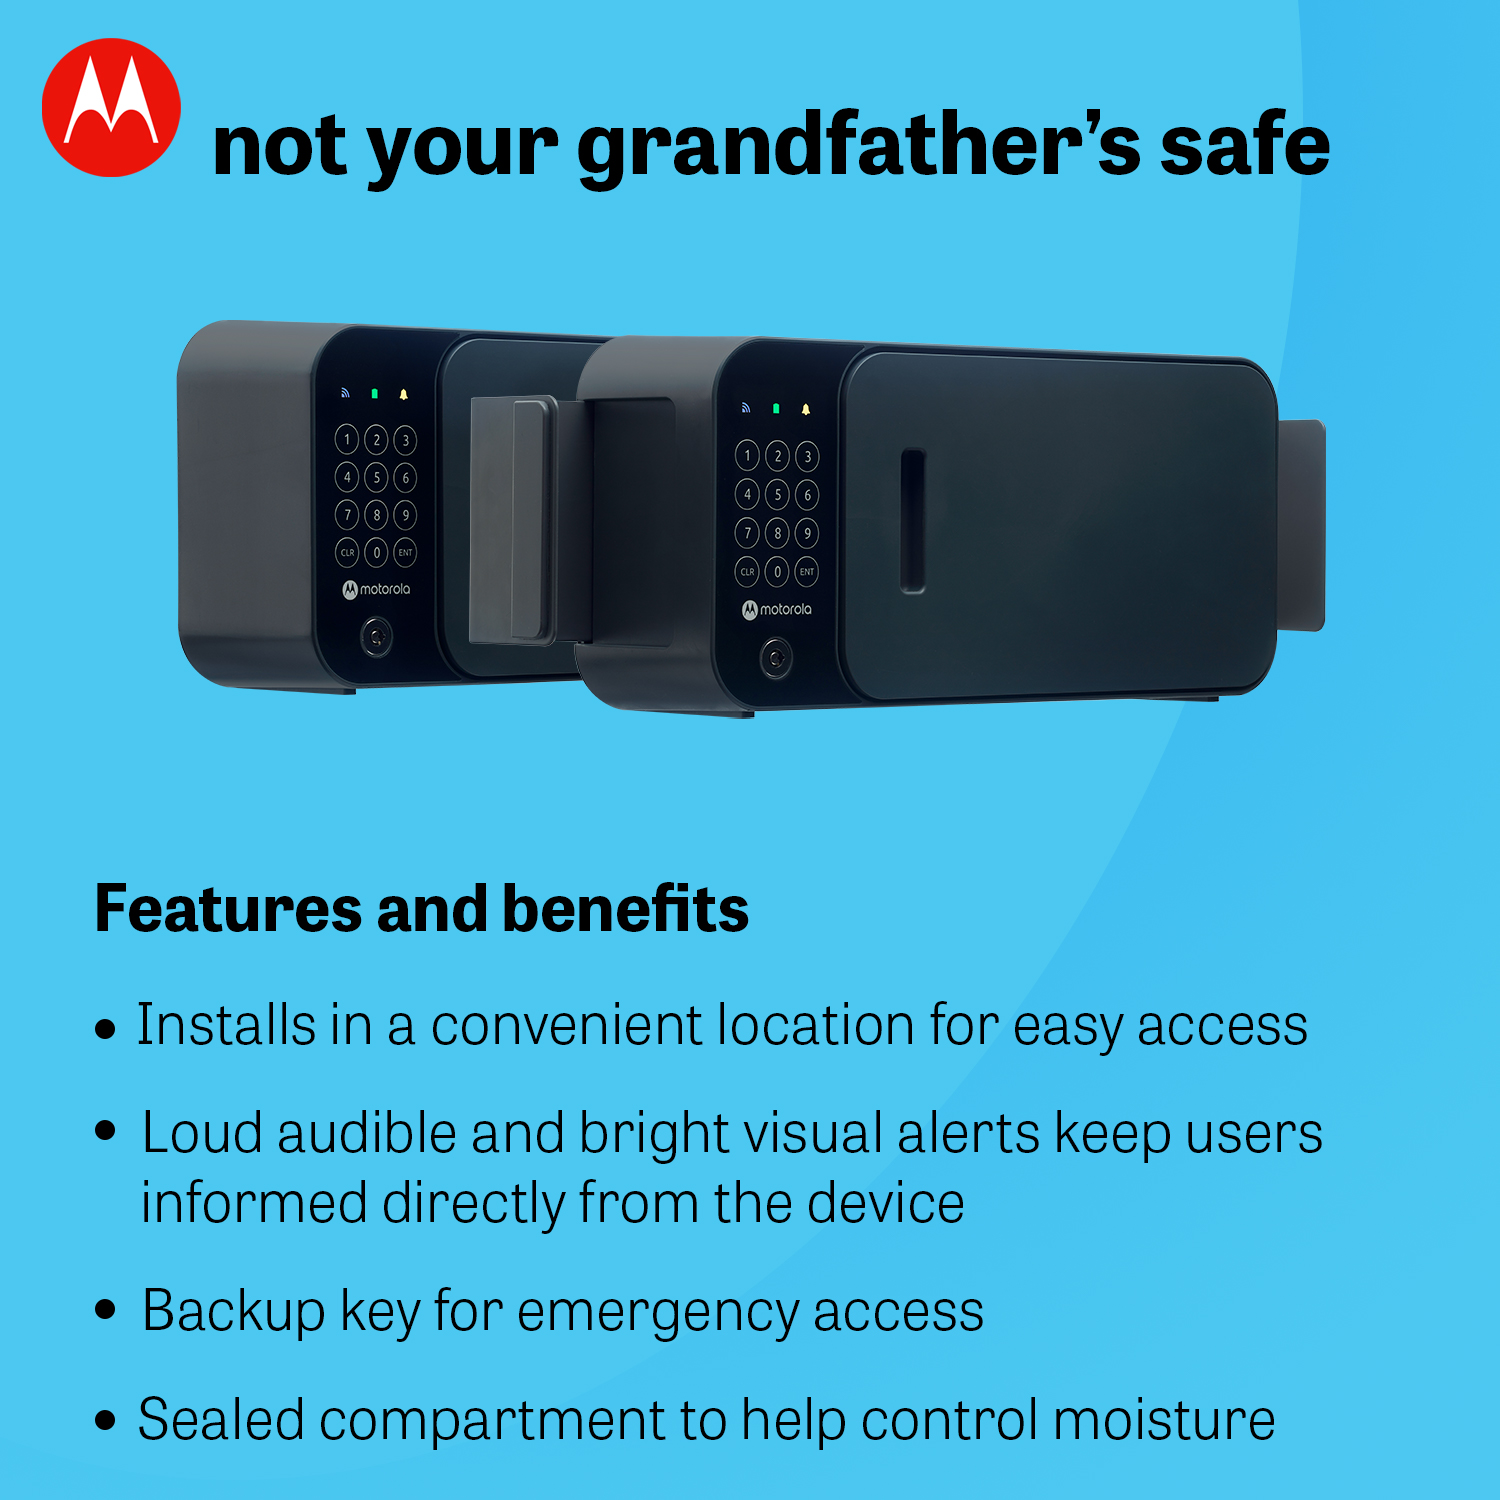 Flex Smart Safe